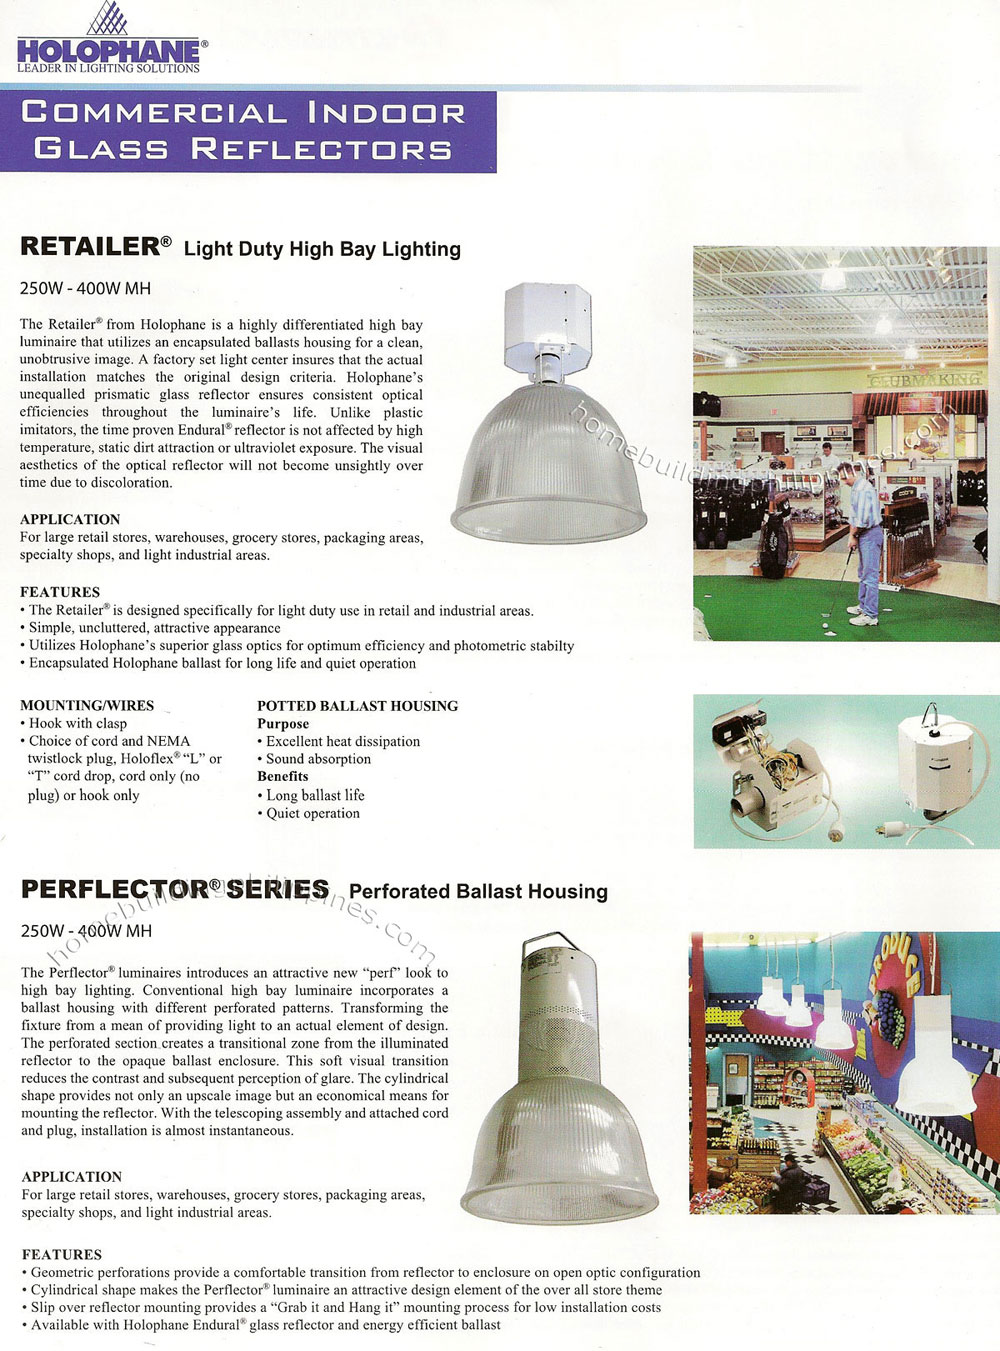 Holophane Lighting: Commercial Indoor Glass Reflectors